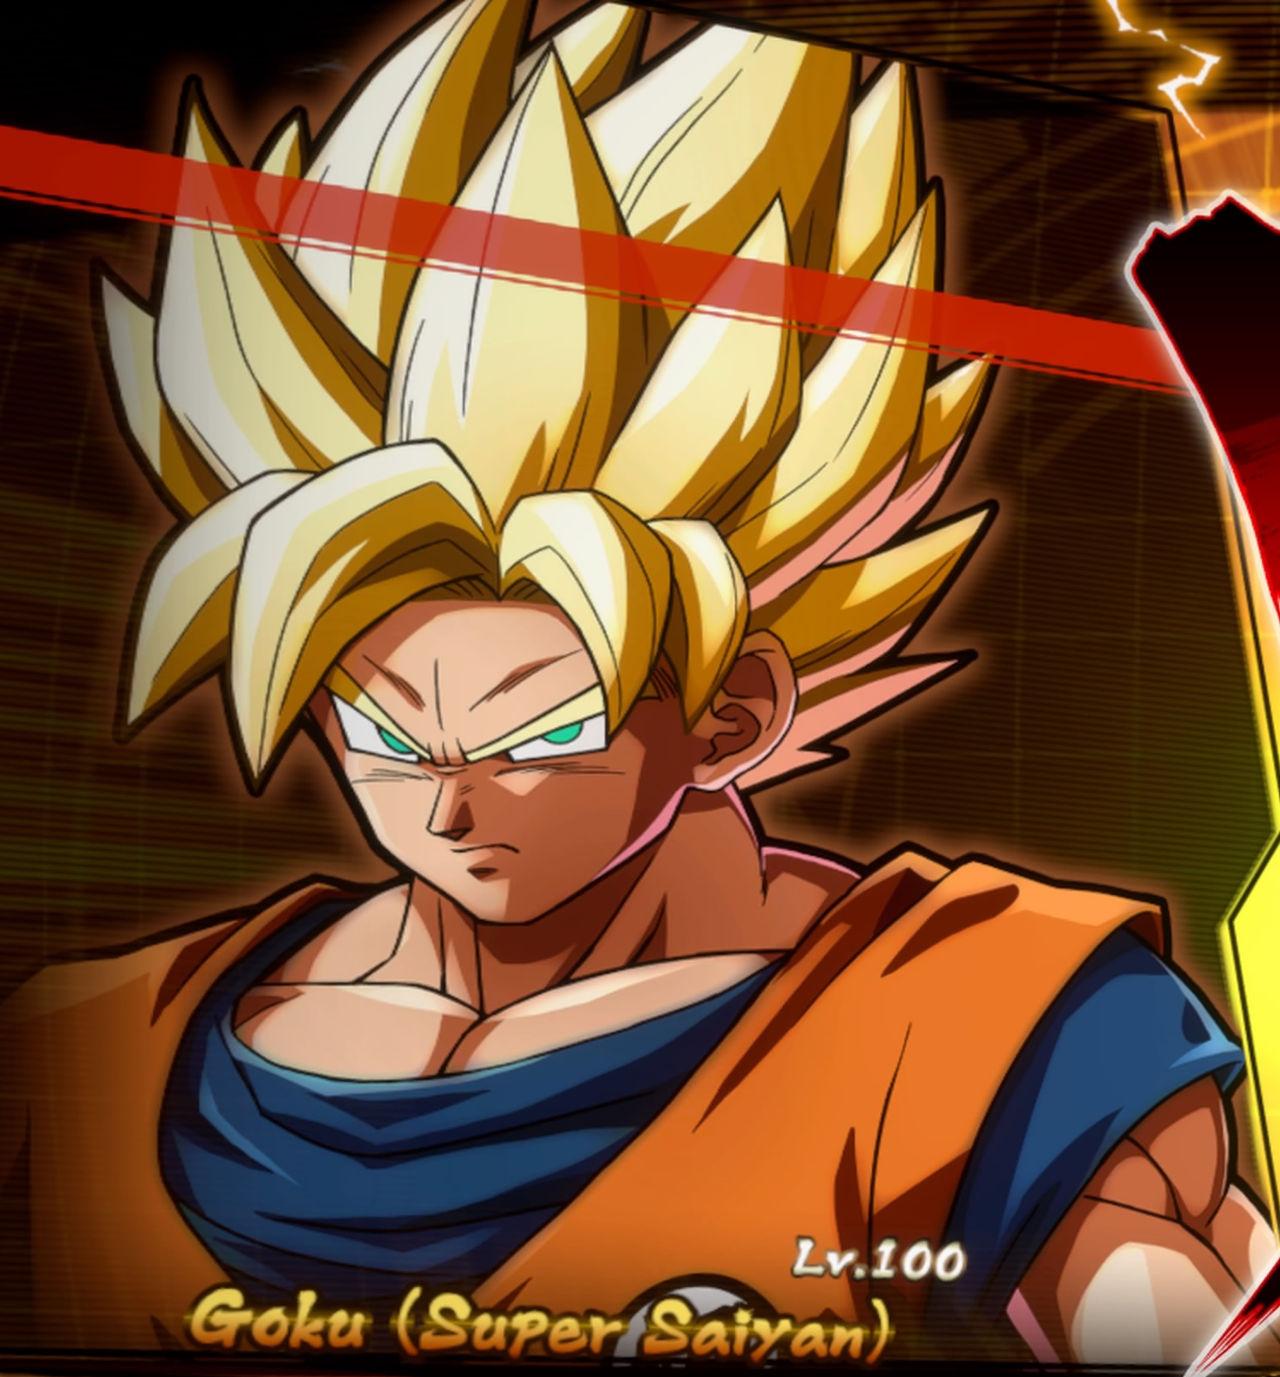 100+] Goku Super Saiyan Pictures